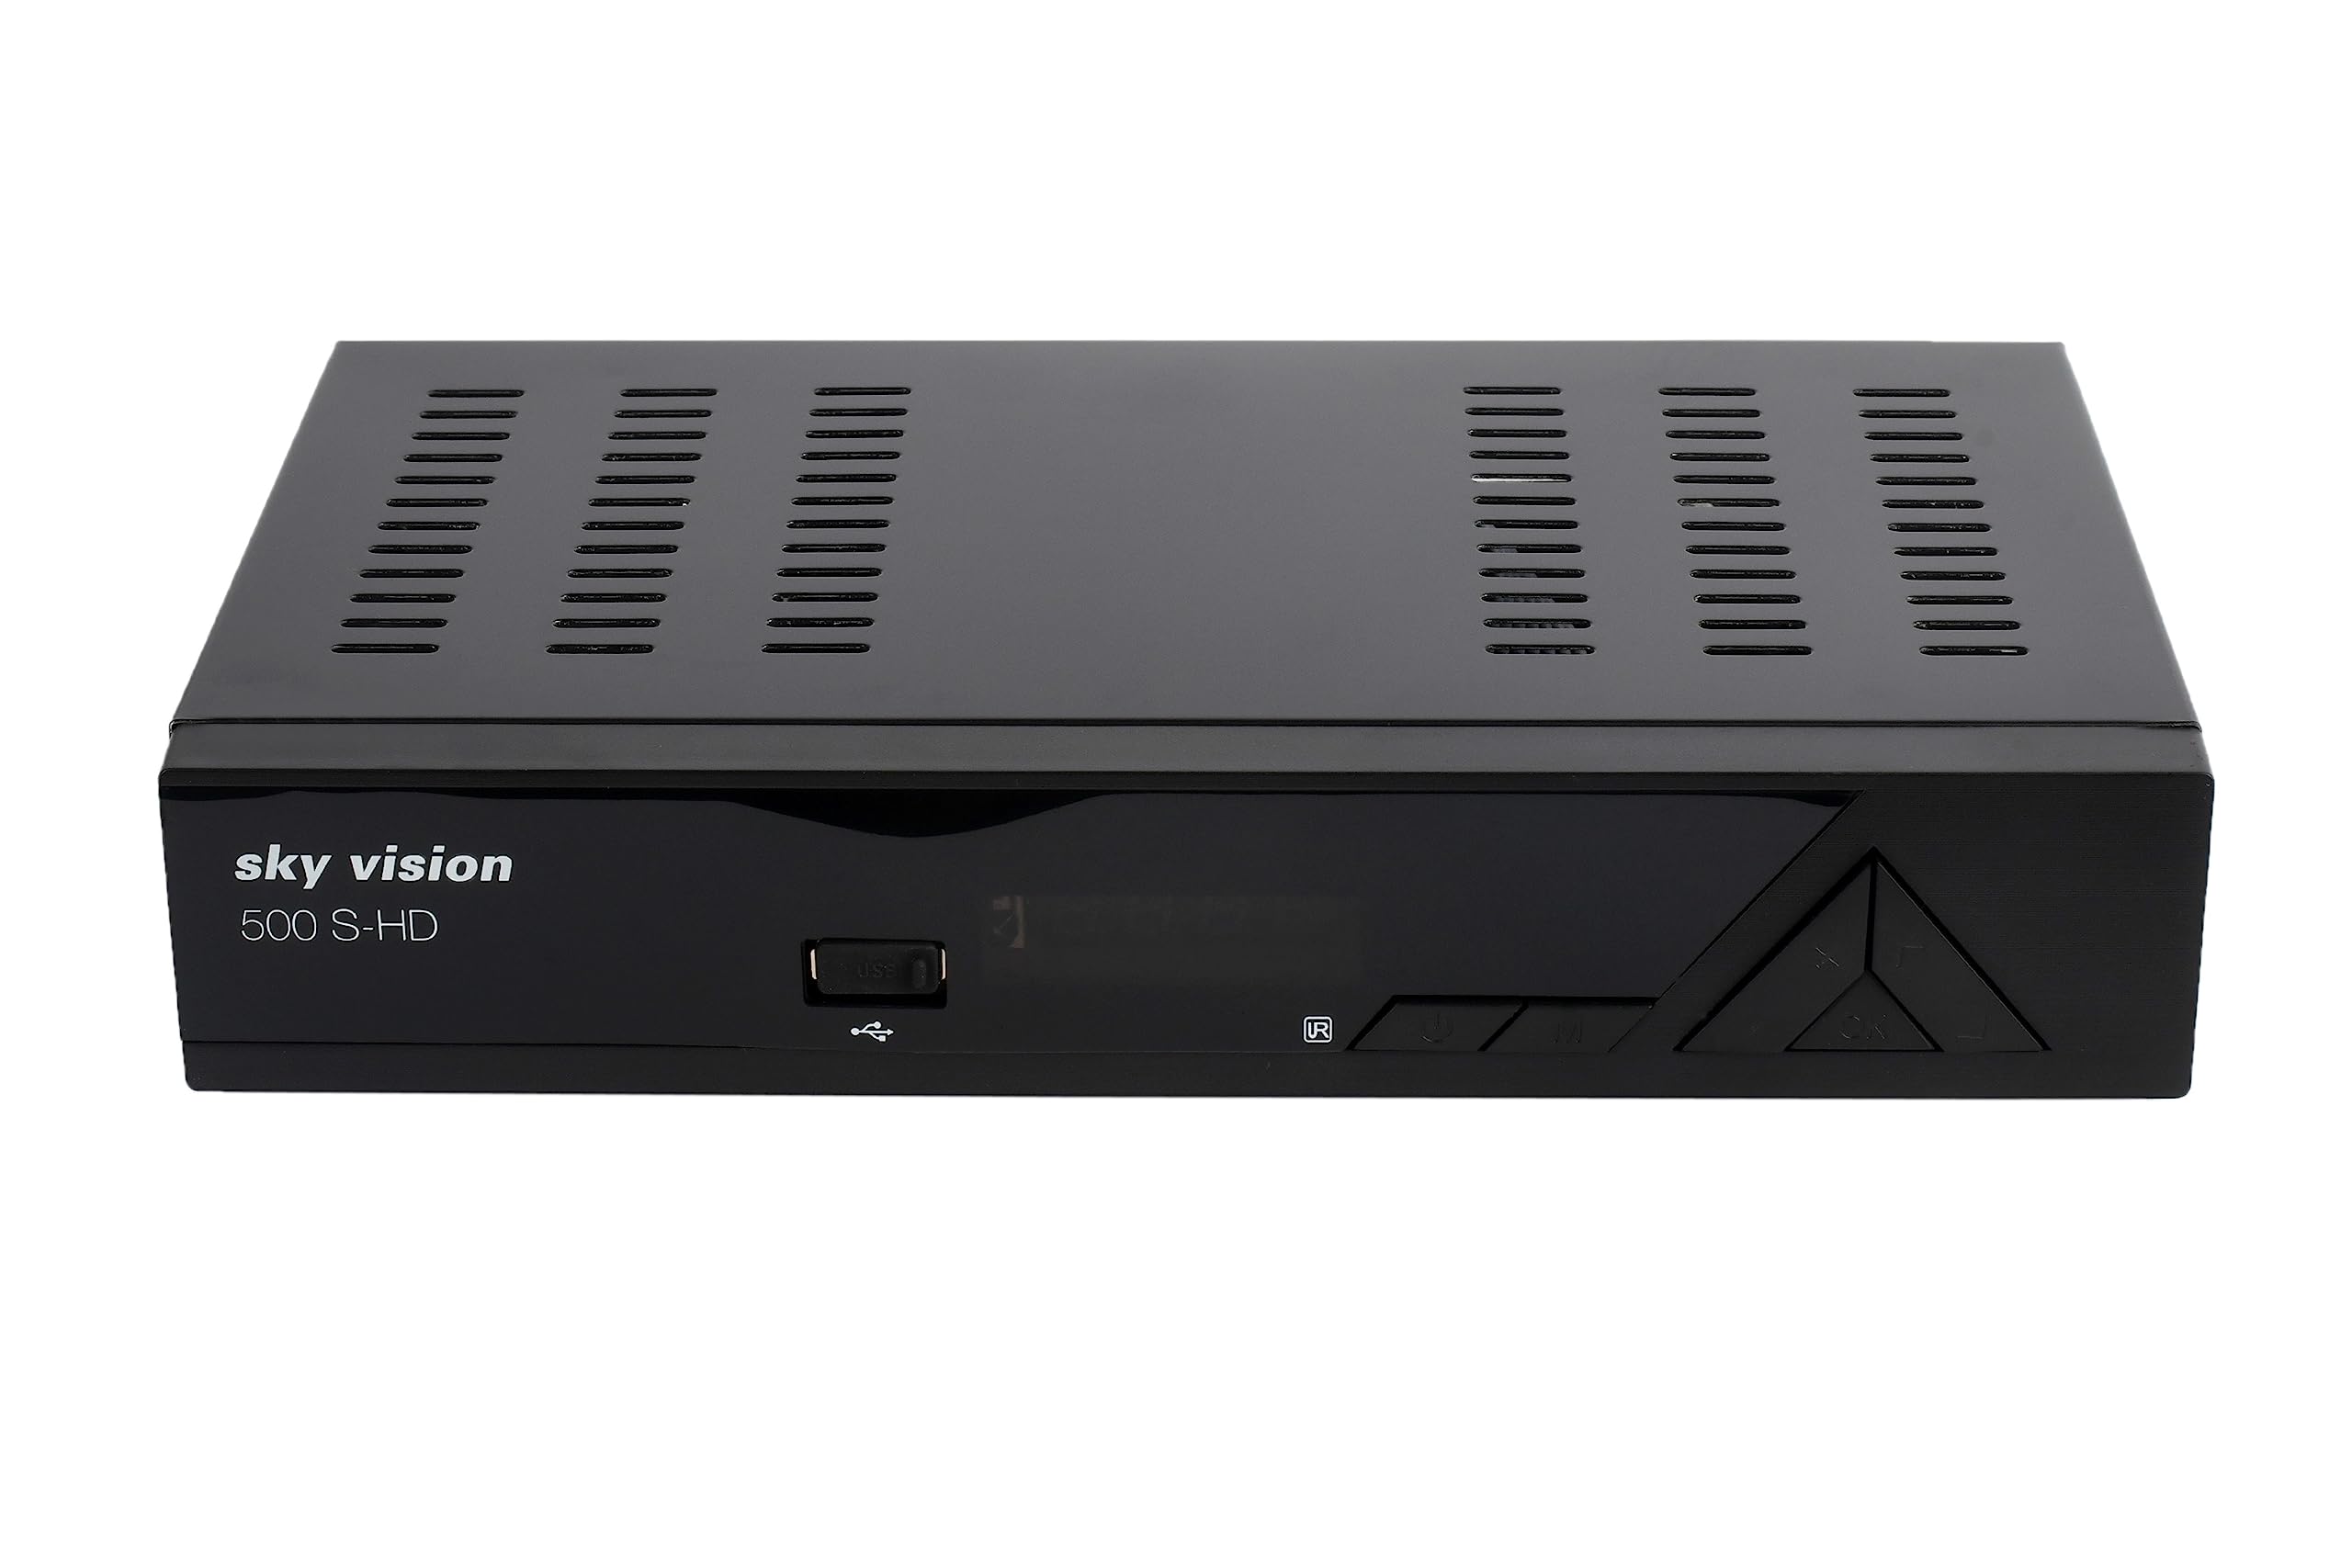 Sky Vision 500 S-HD (HDTV Satellitenreceiver, HDTV, lernbare Fernbedienung, Full HD, Scart, USB,), 4043745896503, schwarz